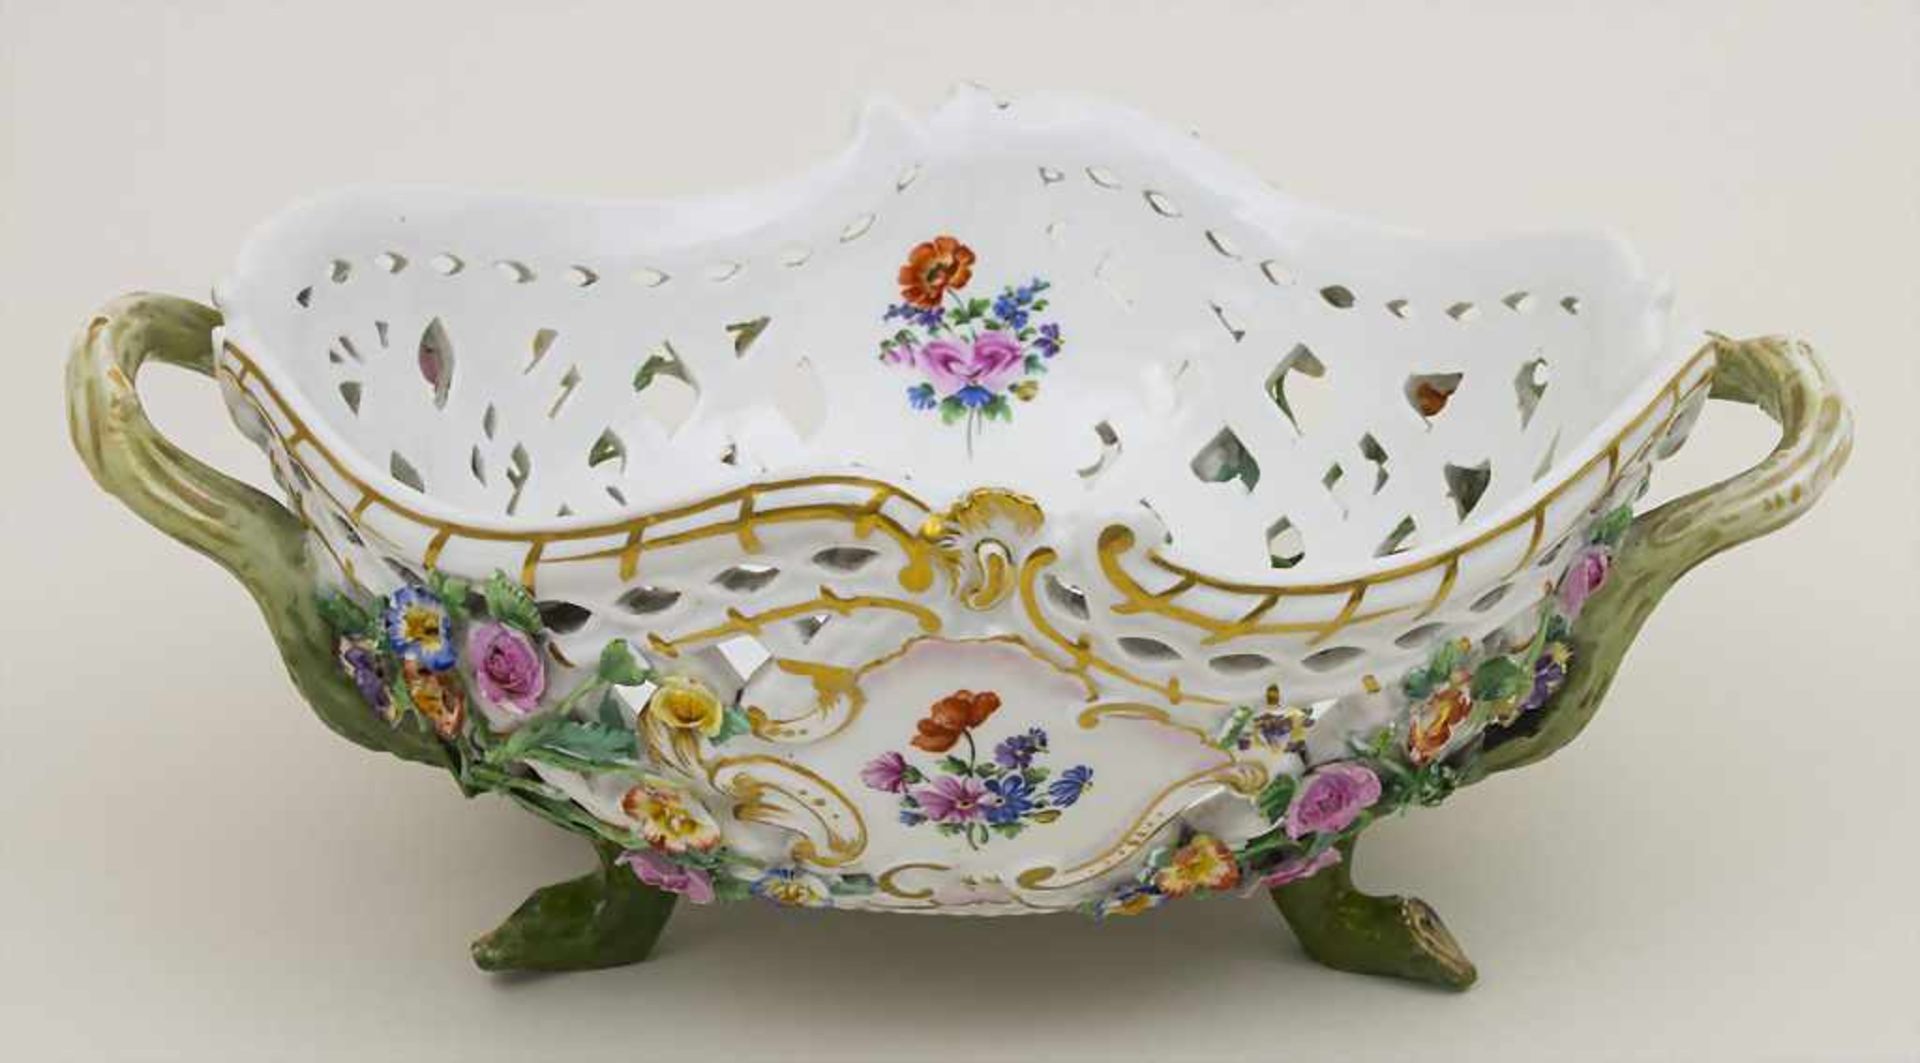 Korbschale / A basket shaped bowl, Meissen, um 1880Material: Porzellan, polychrom bemalt, glasiert,